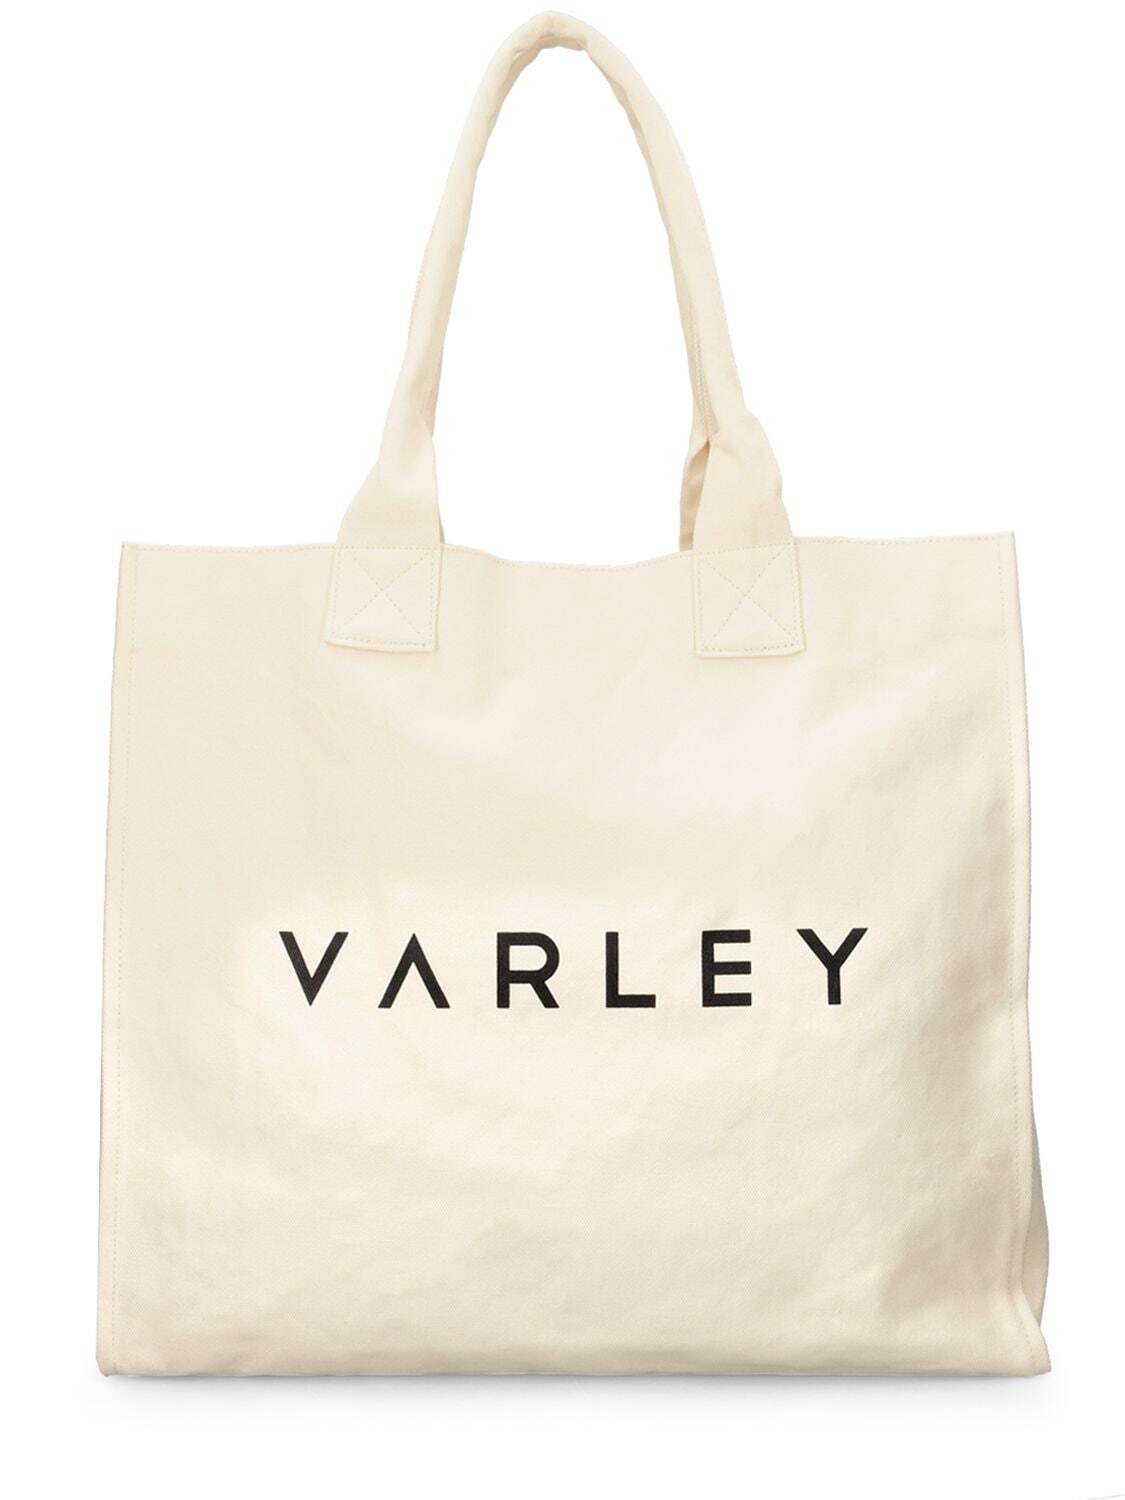 VARLEY Market Tote in white / beige